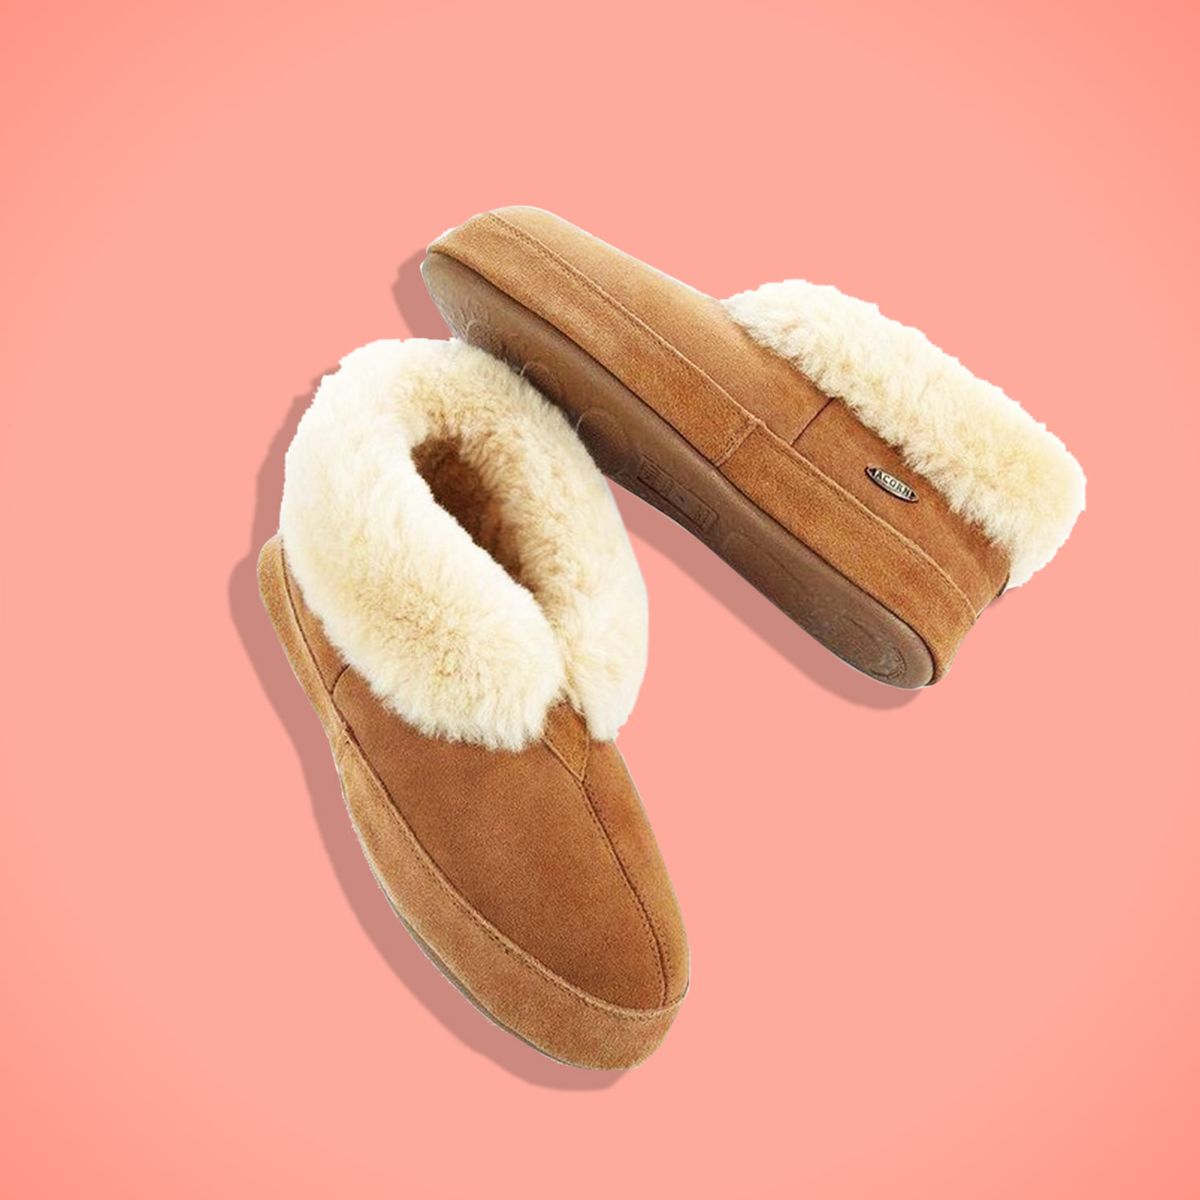 acorn sheepskin slippers